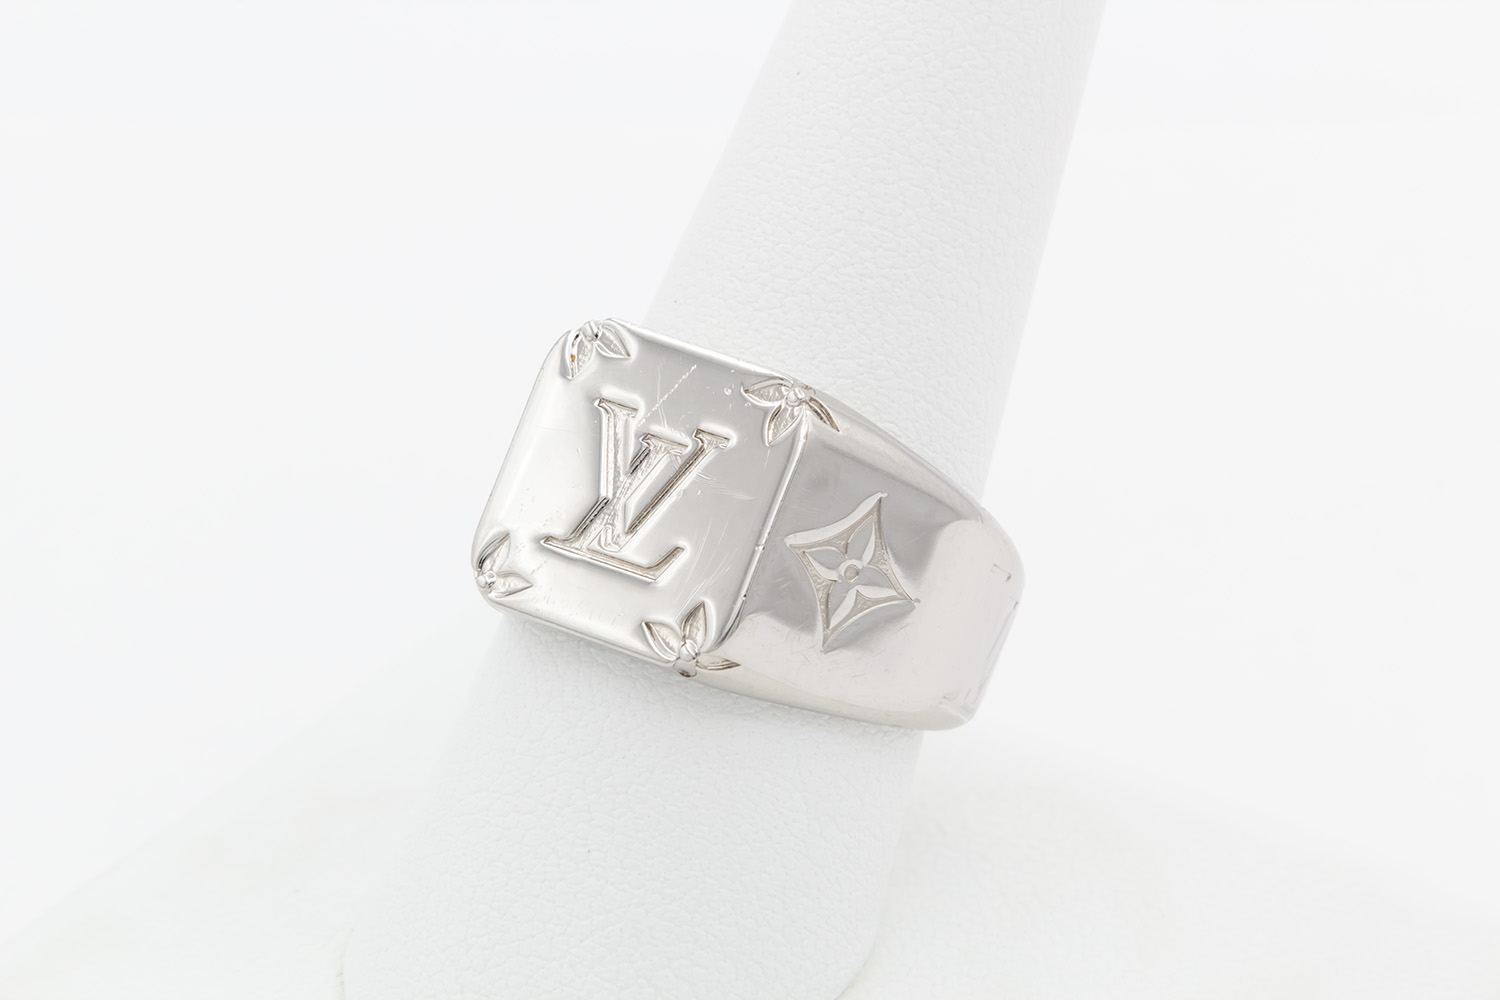 Authenticated used Louis Vuitton Louis Vuitton Signet Ring Monogram Ring/Ring M80191 Notation Size L Metal Gold, Men's, Size: Large, Grey Type